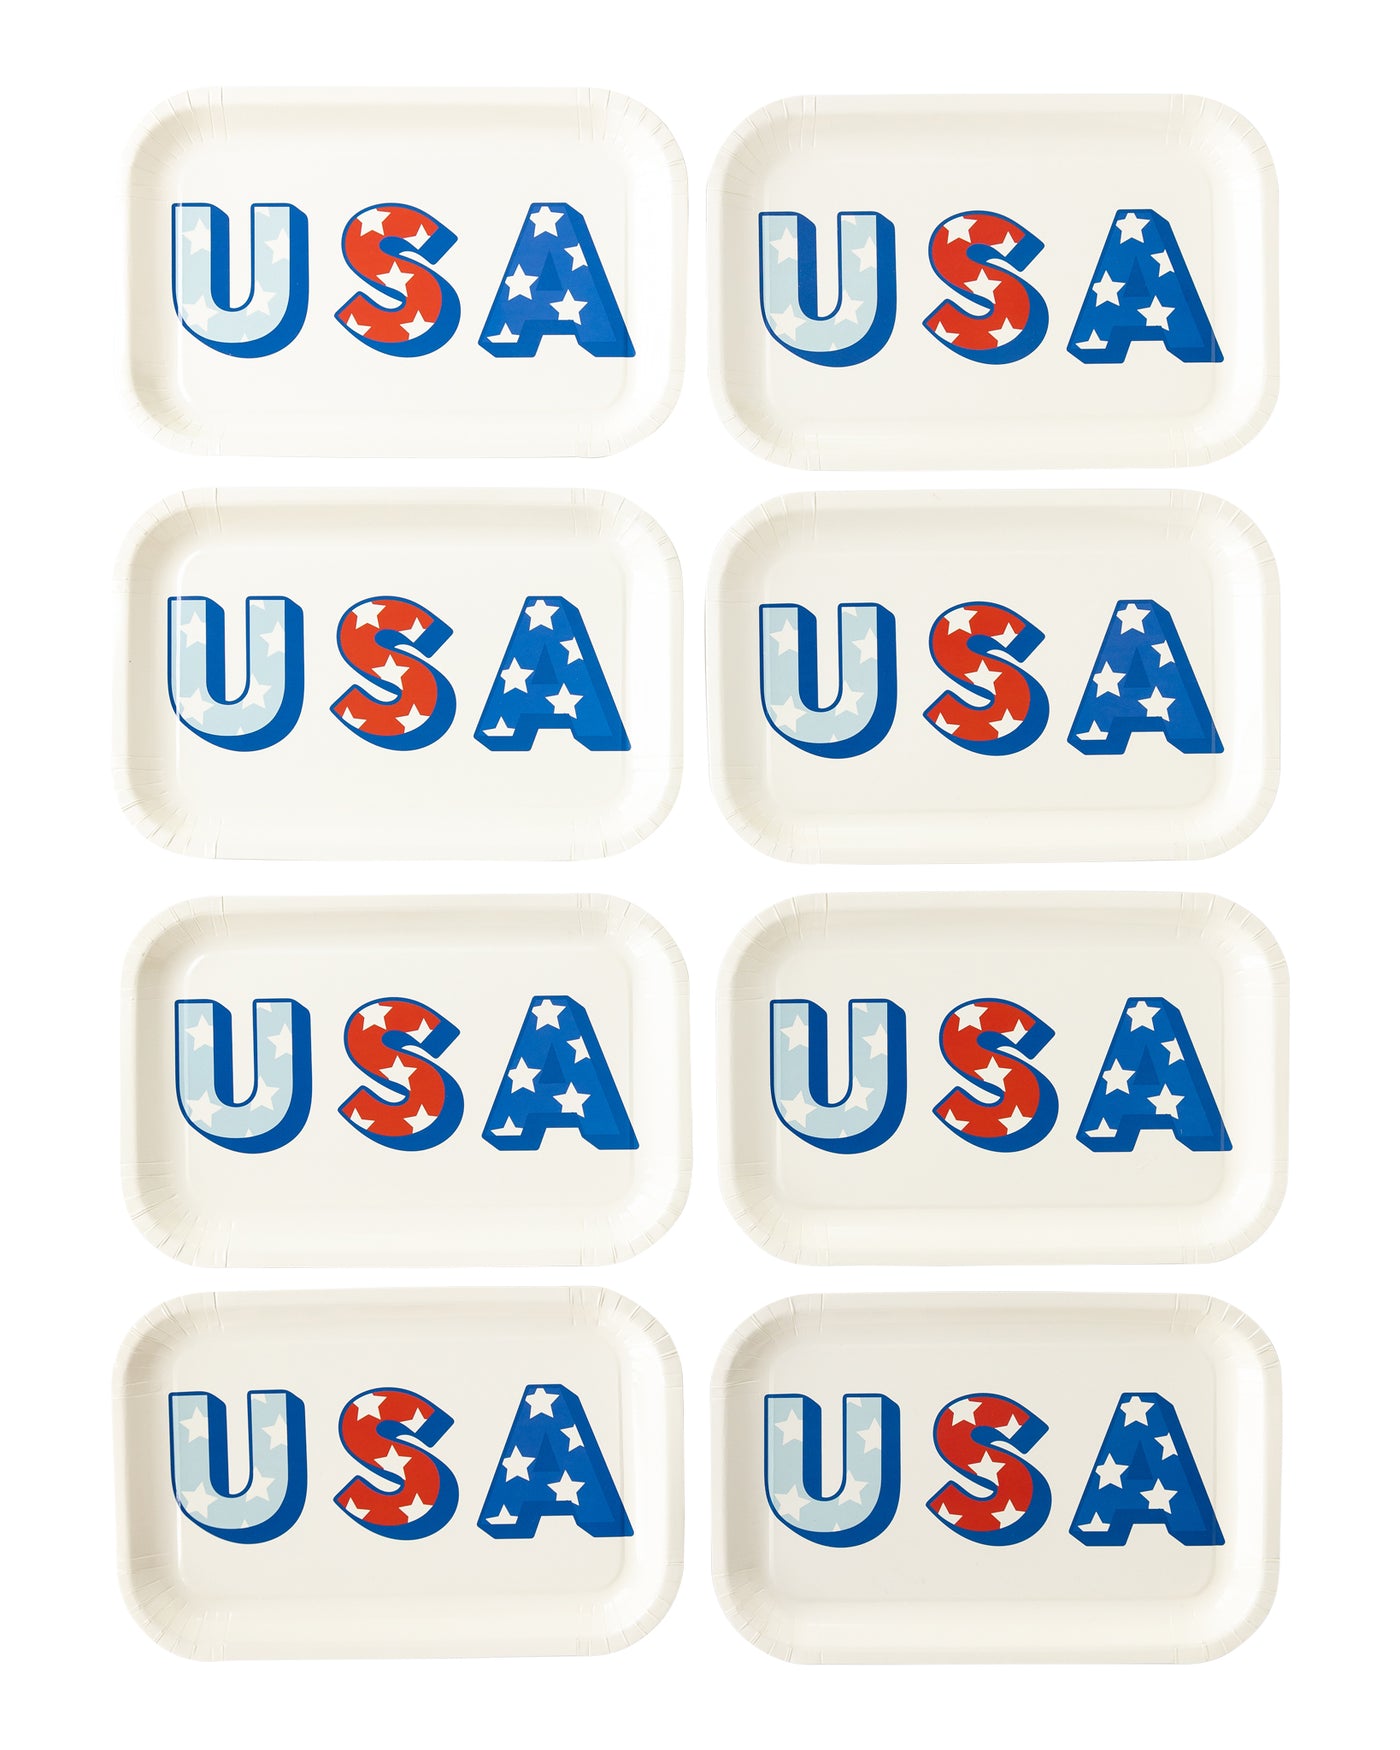 USA Shaped Paper Plate